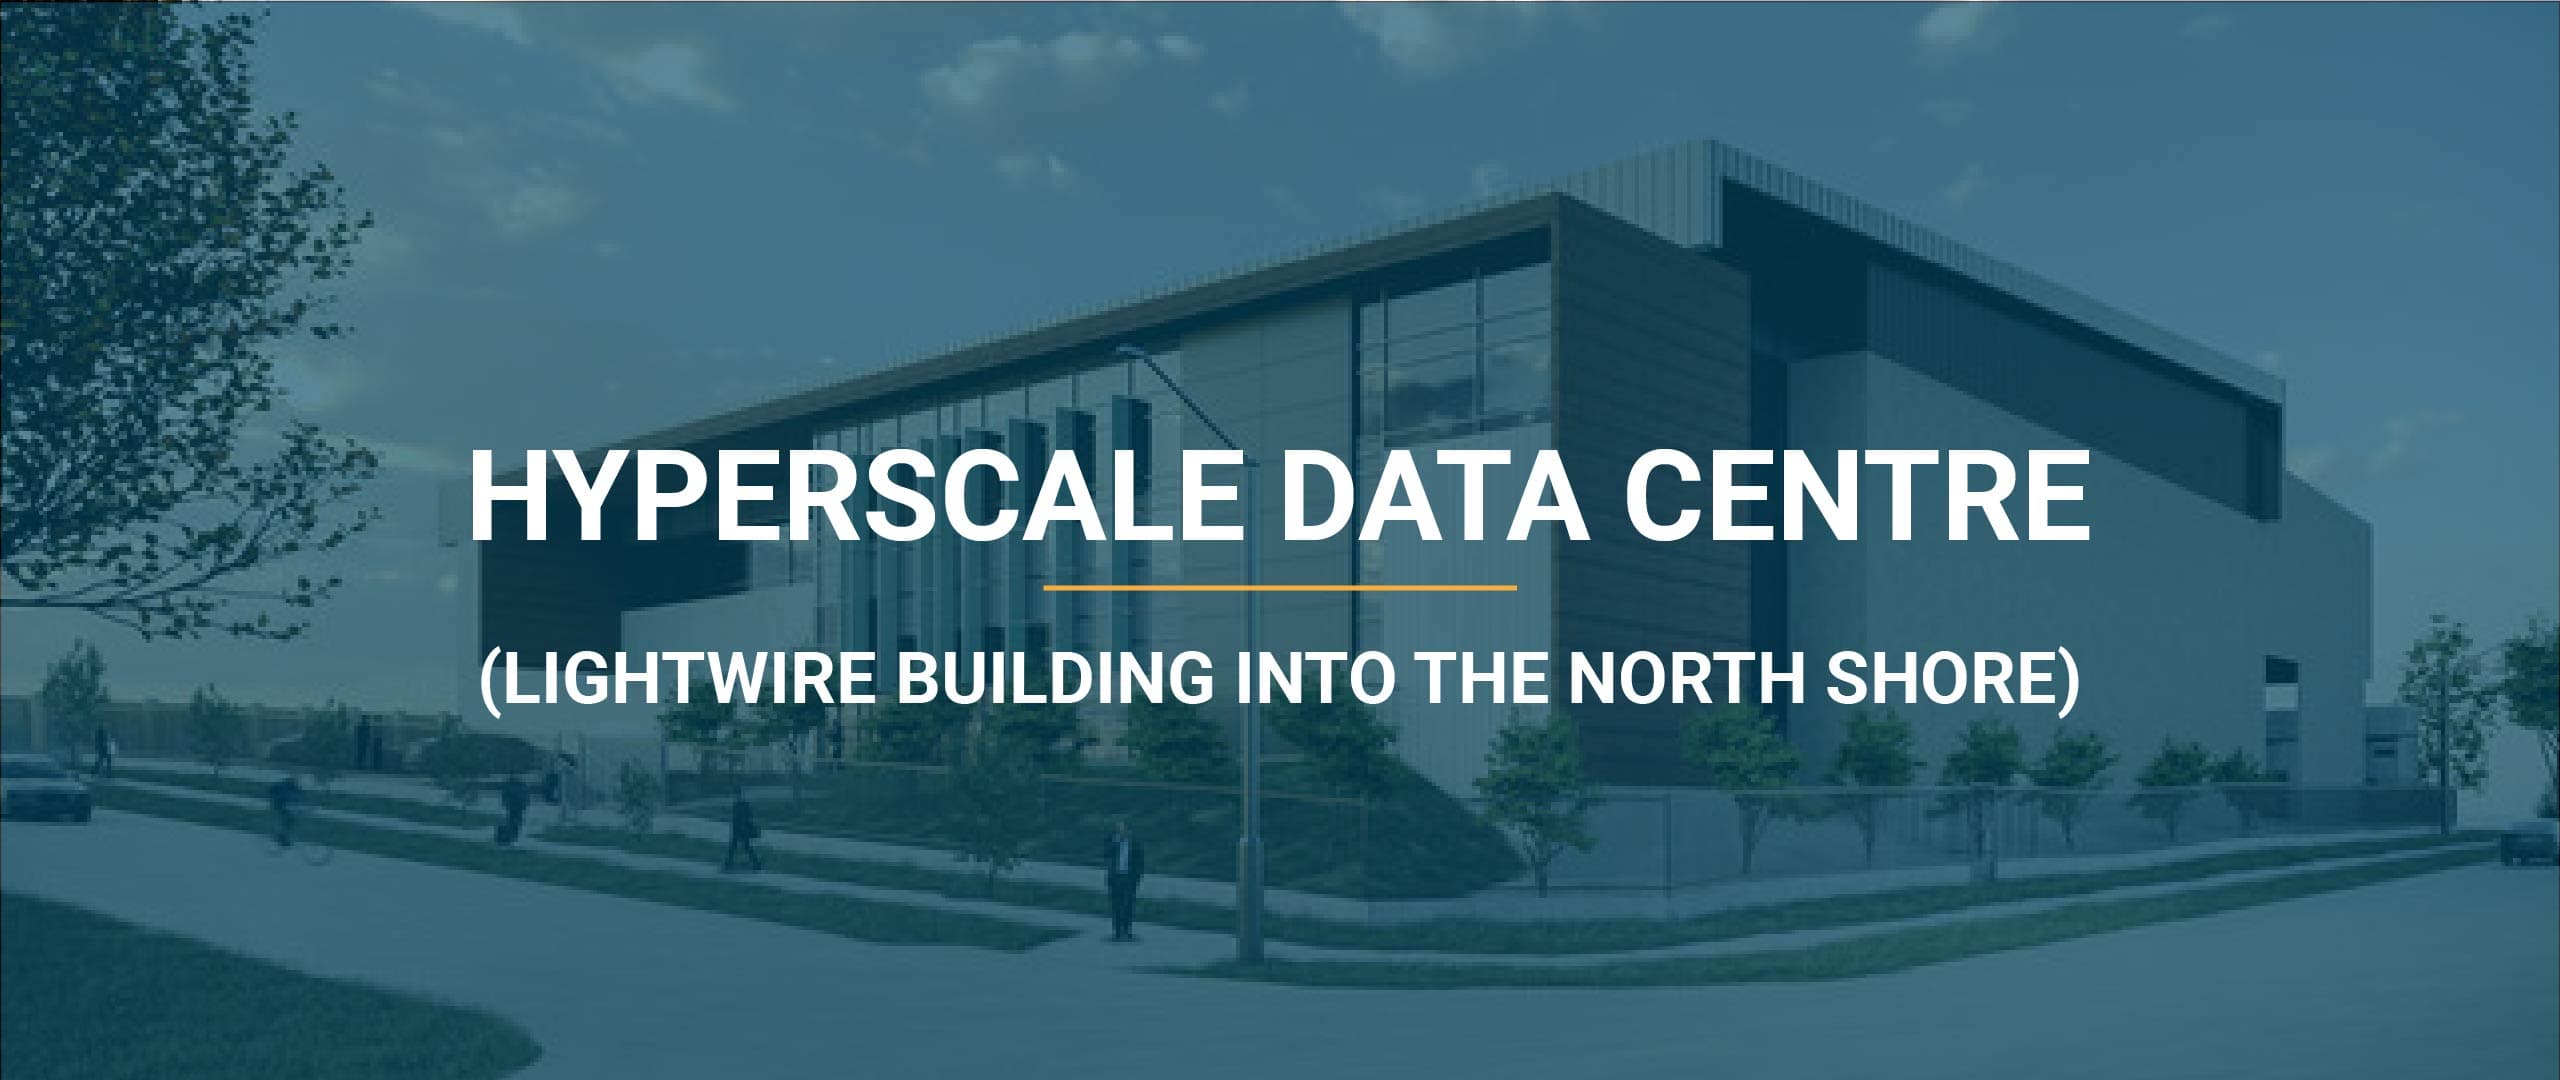 Hyperscale Data Centre